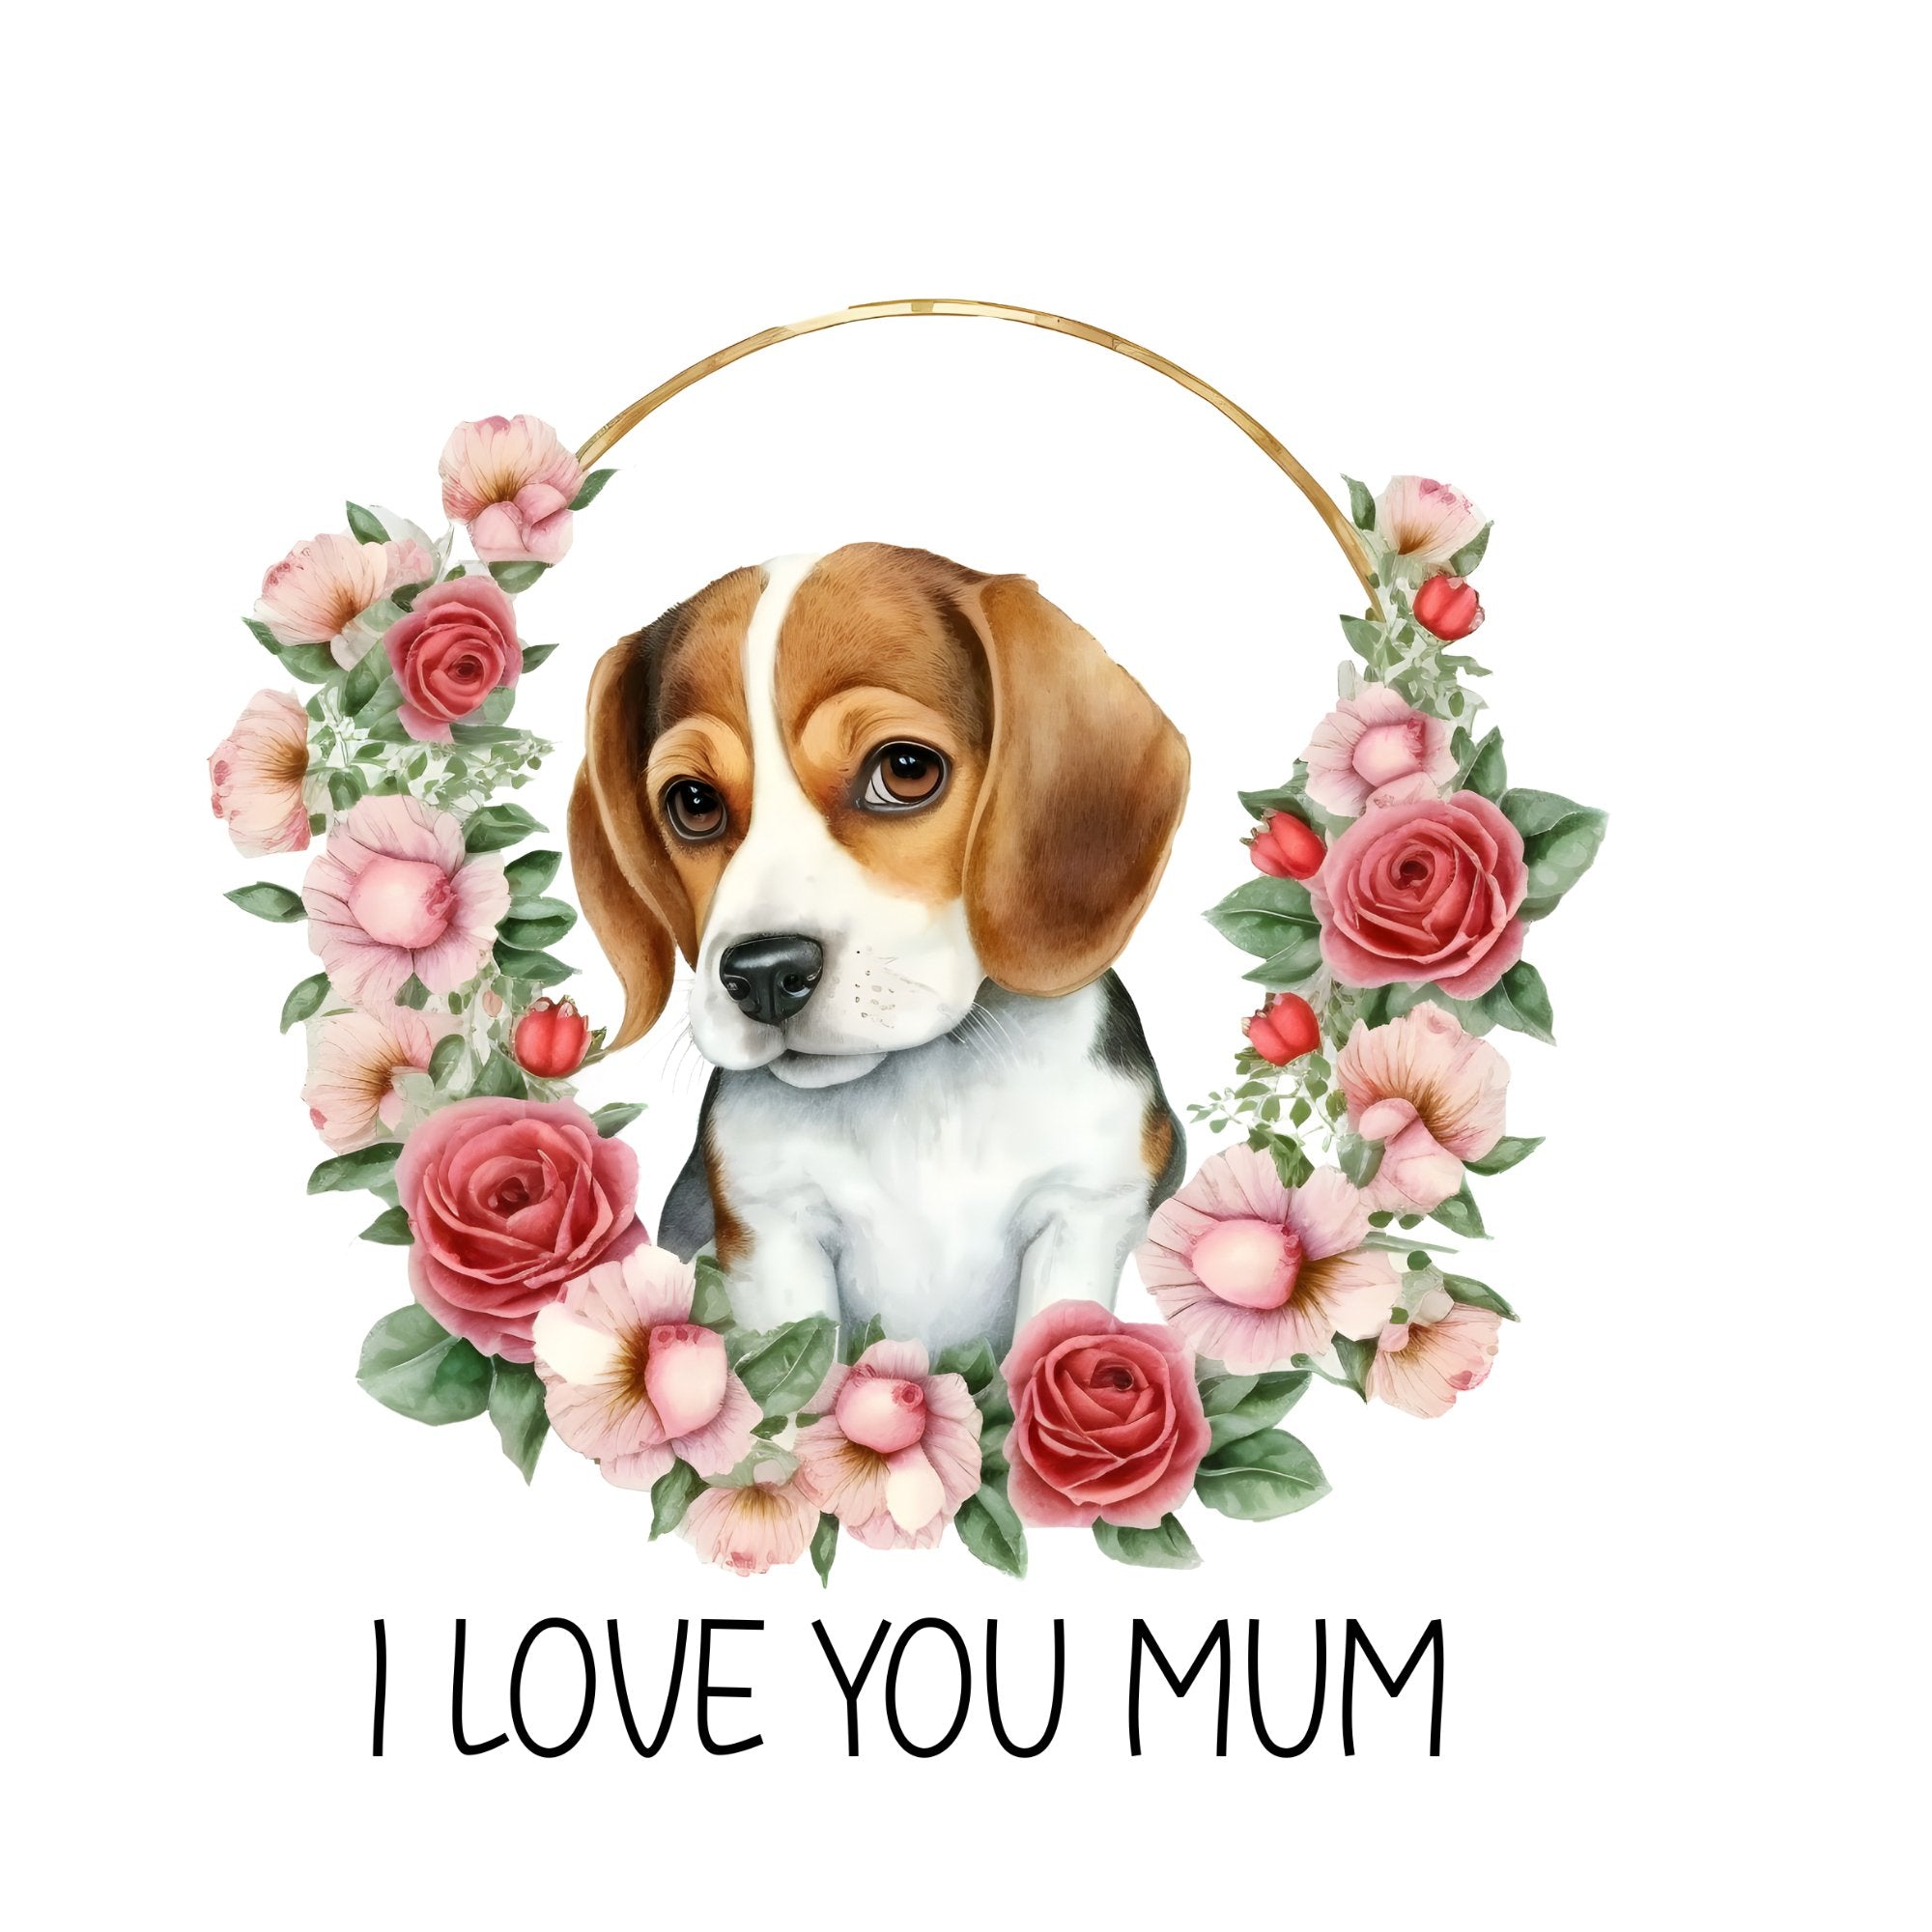 I Love You Mum Mug-11oz White Ceramic Mug - Sweetie